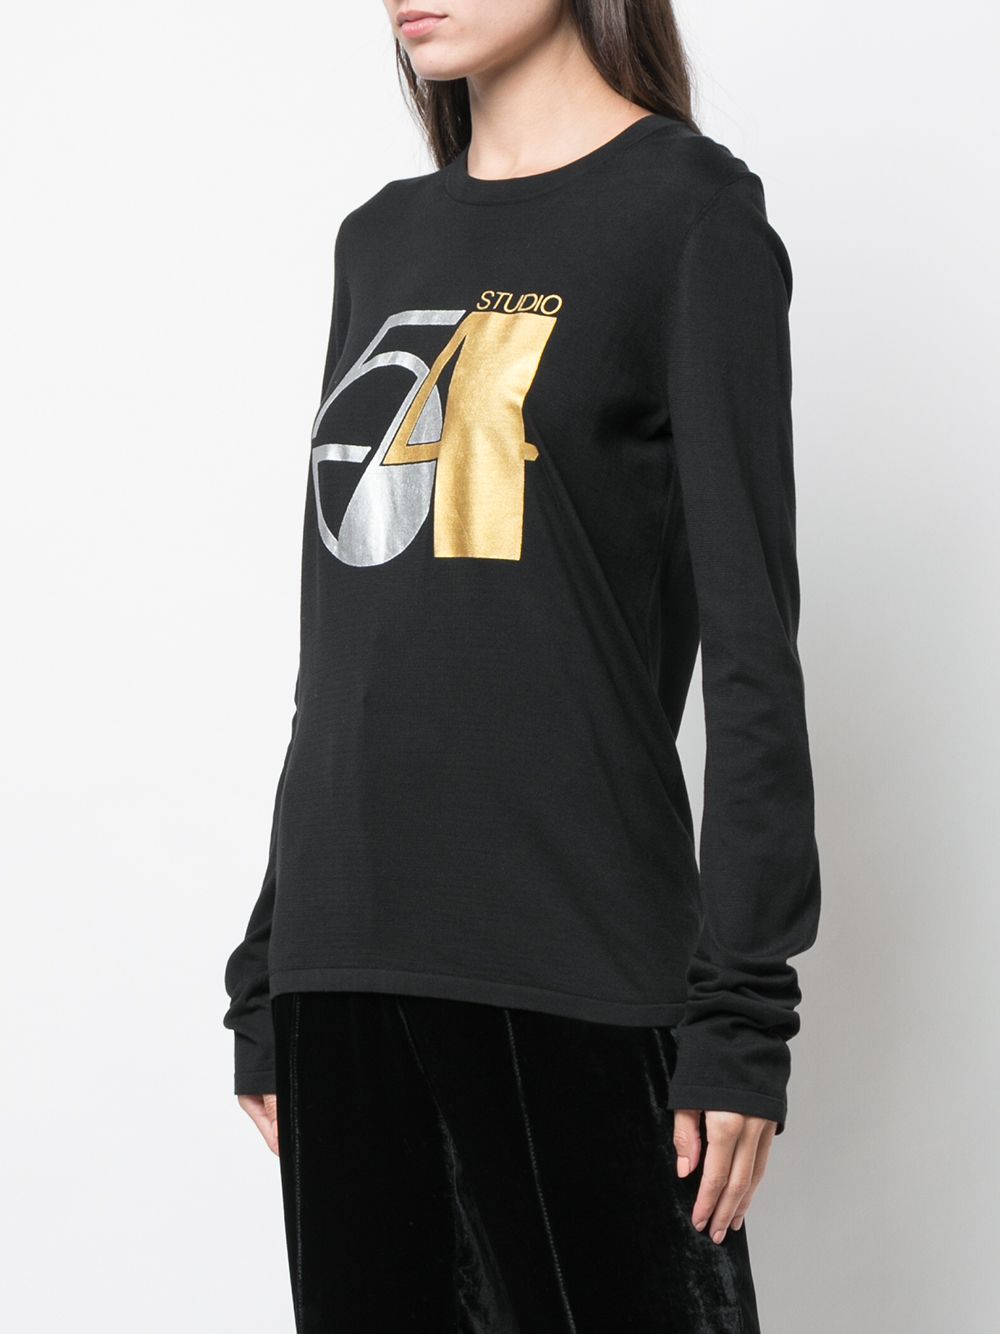 фото Michael Kors футболка Studio 54 с длинными рукавами